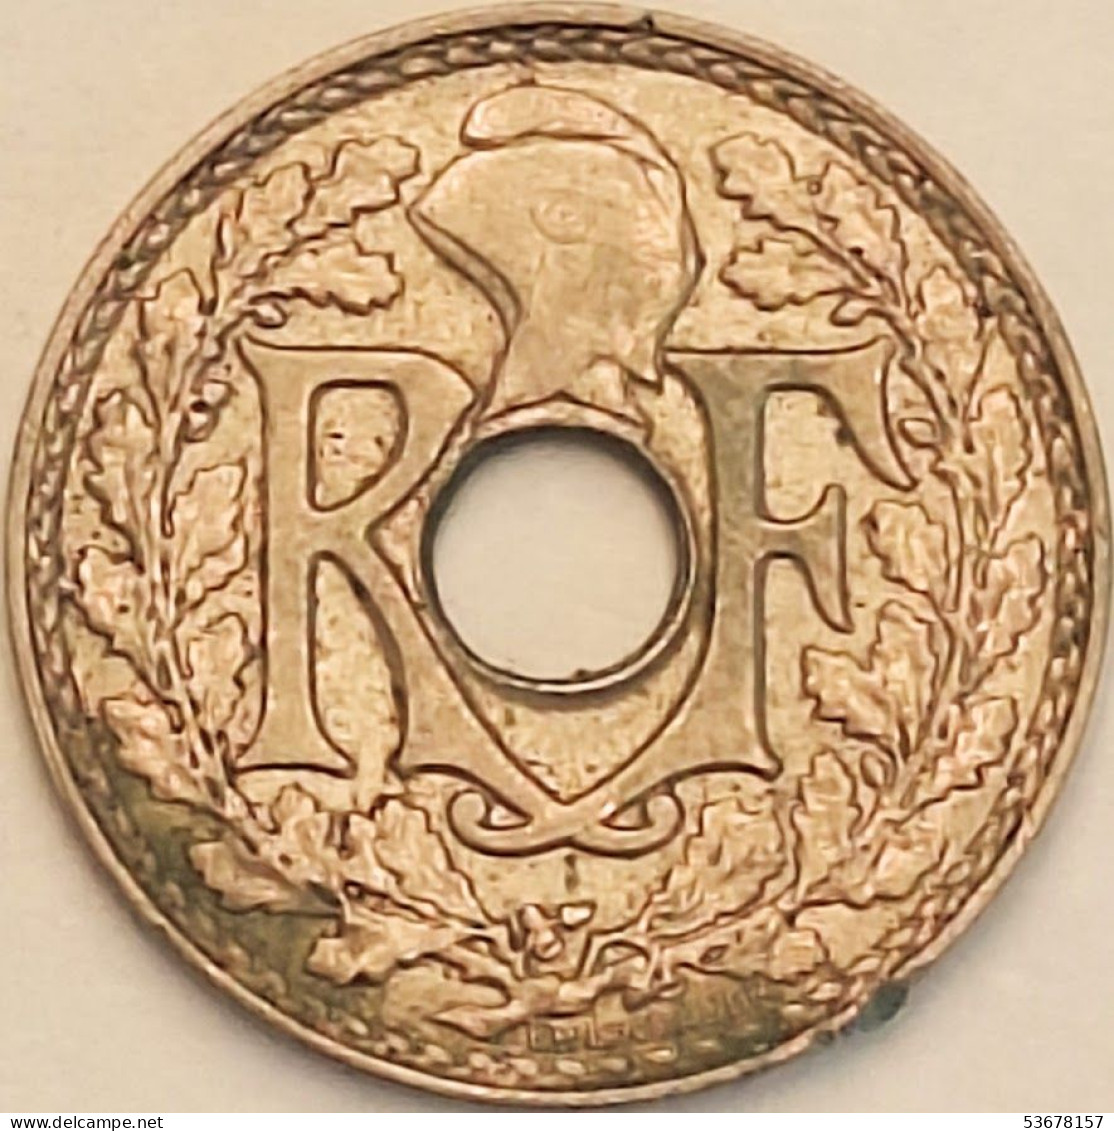 France - 5 Centimes 1938, KM# 875 (#3980) - 5 Centimes